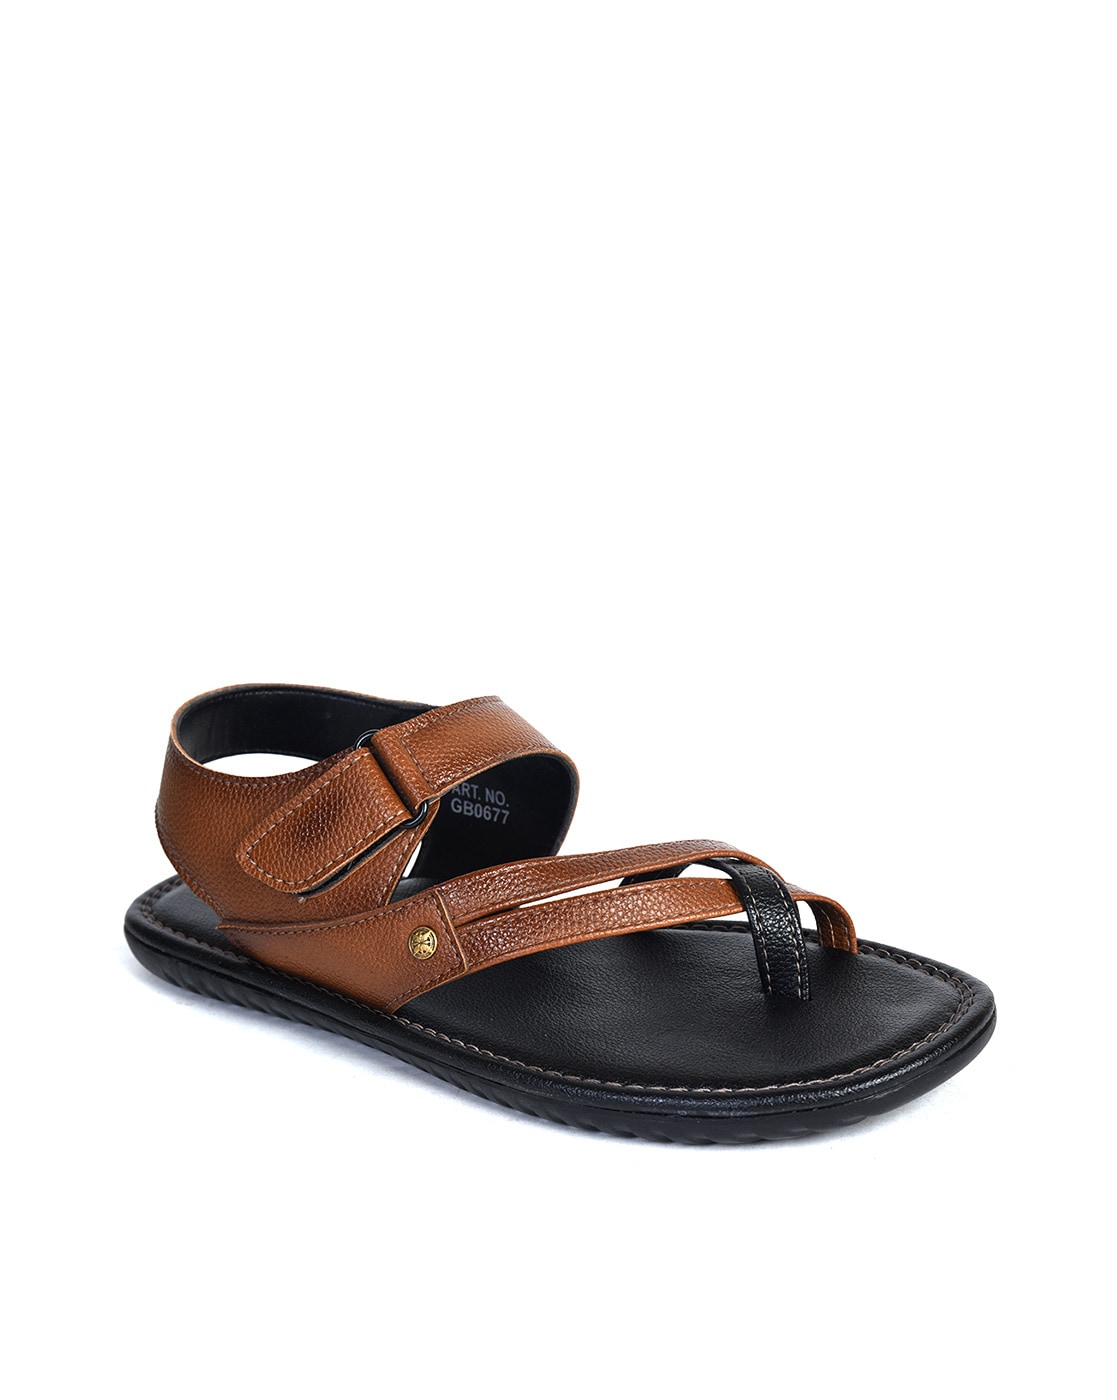 Mens Genuine Leather Roman Paragon Sandals For Men Perfect For Summer  Casual Wear And Beach Days Sandalias De Hombre De Cuero 230703 From Lian06,  $20.2 | DHgate.Com